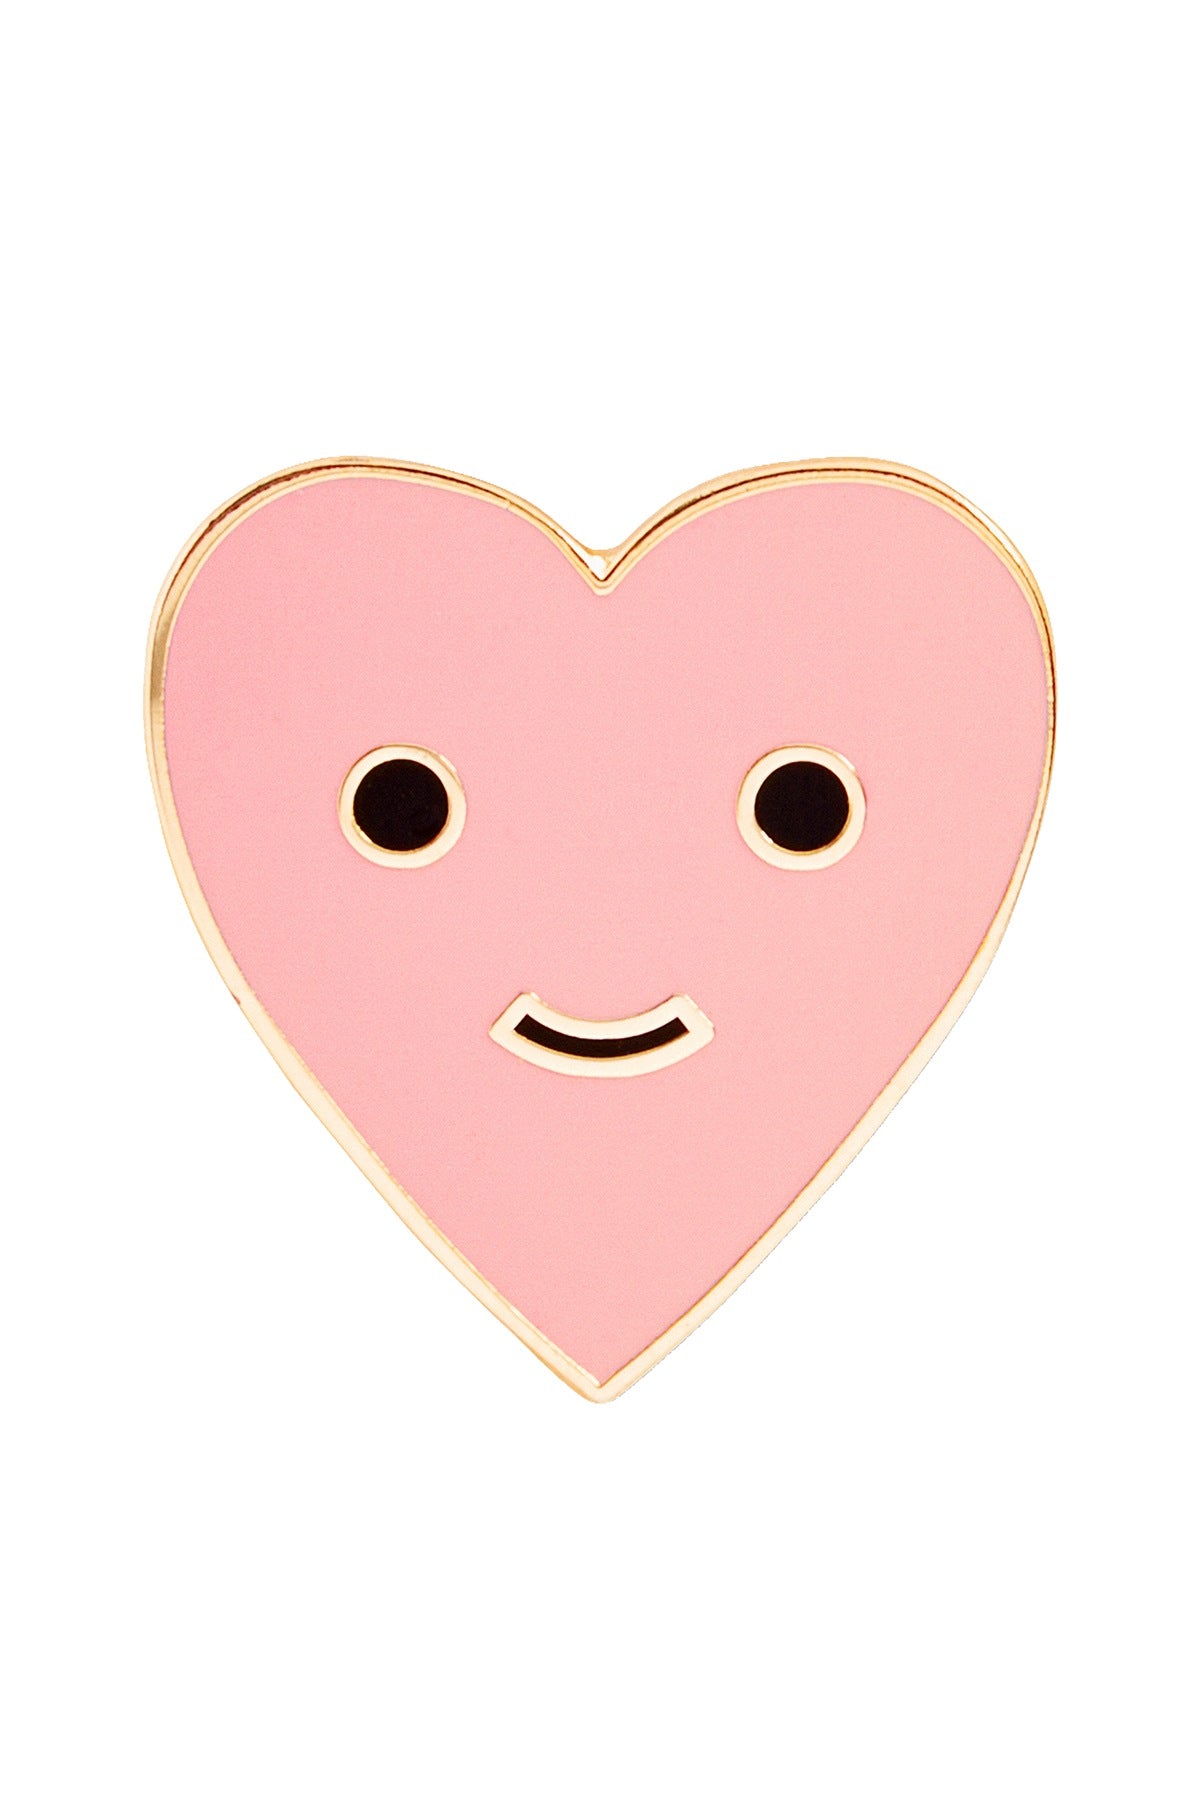 Ban.do Pink/Gold Herbie Heart Enamel Flair Pin